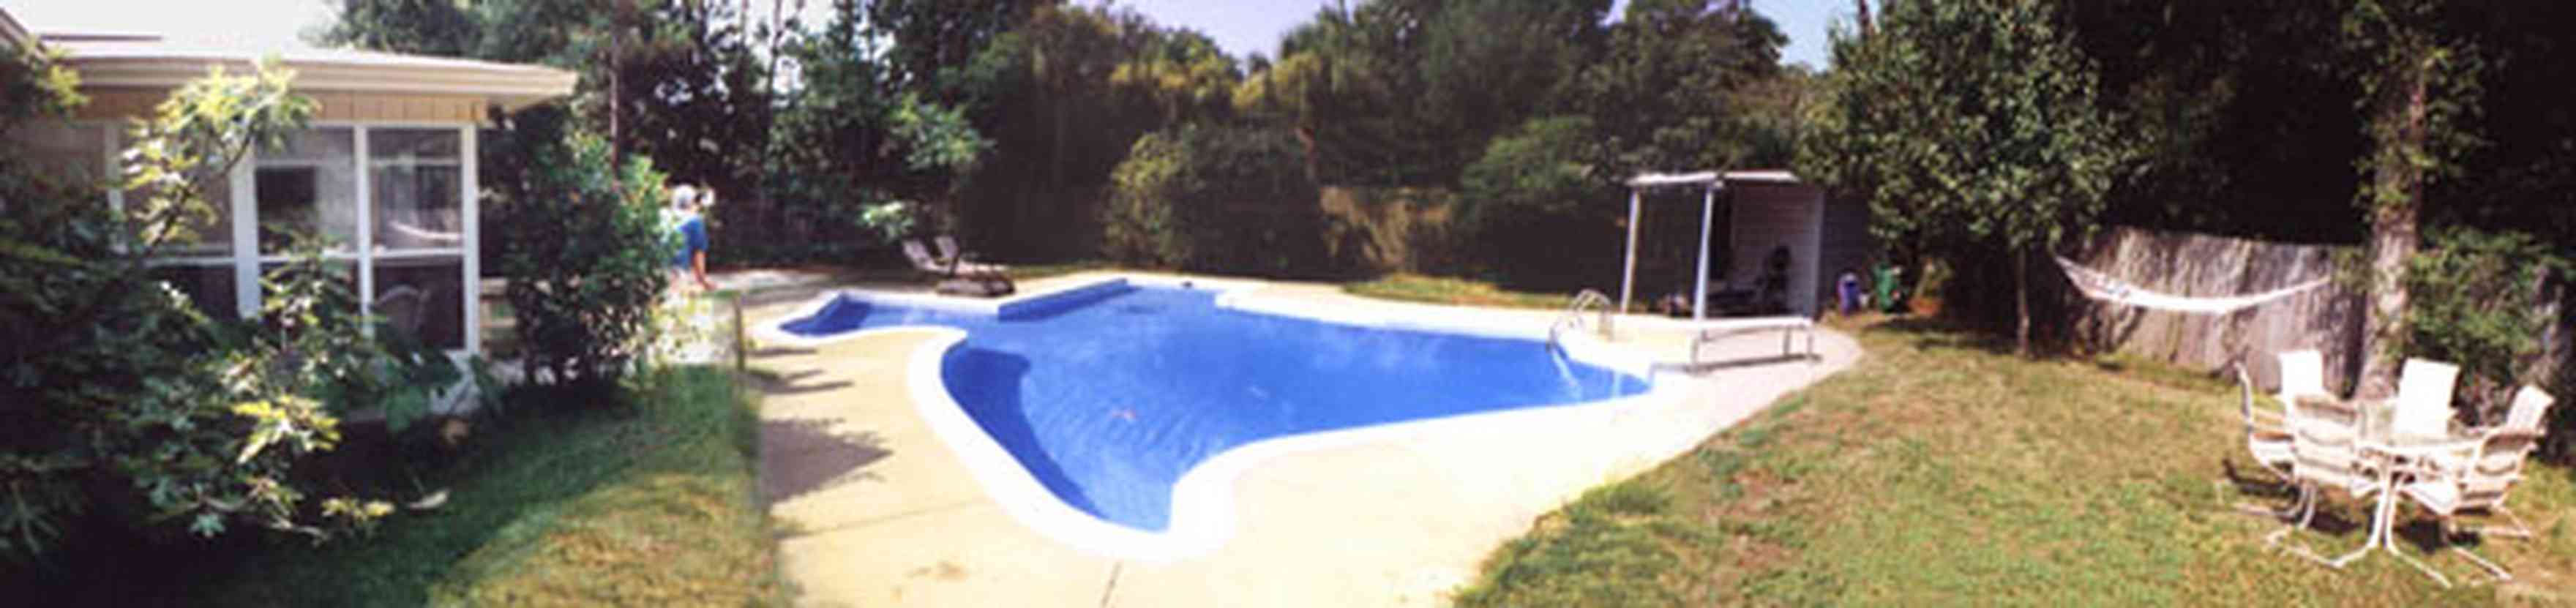 Pensacola:-Cordova-Park-Subdivision_02.jpg:  swimming pool, backyard, subdivision, ranch style house